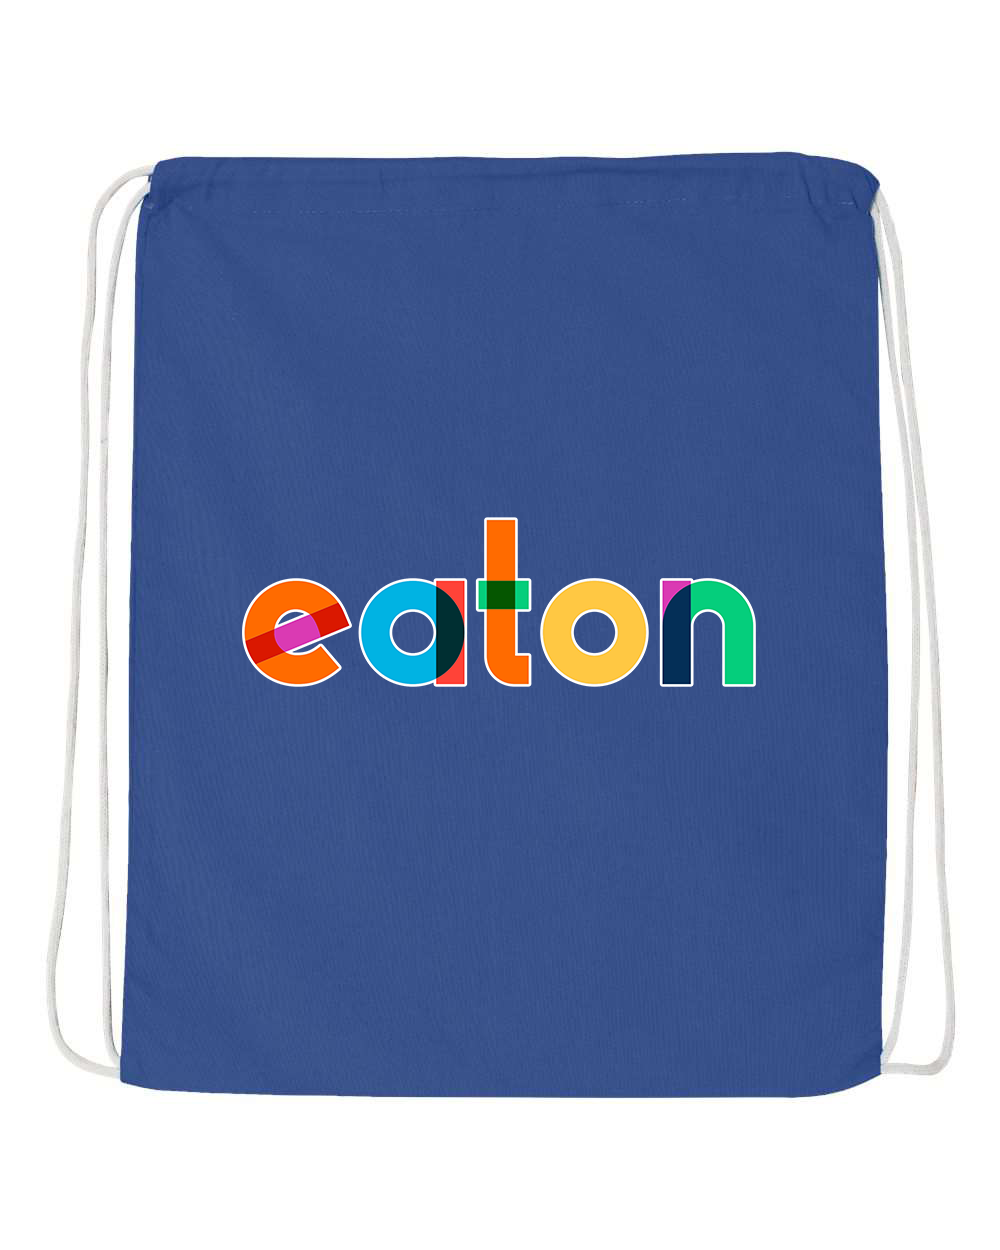 Eaton Colorful Drawstring Bag